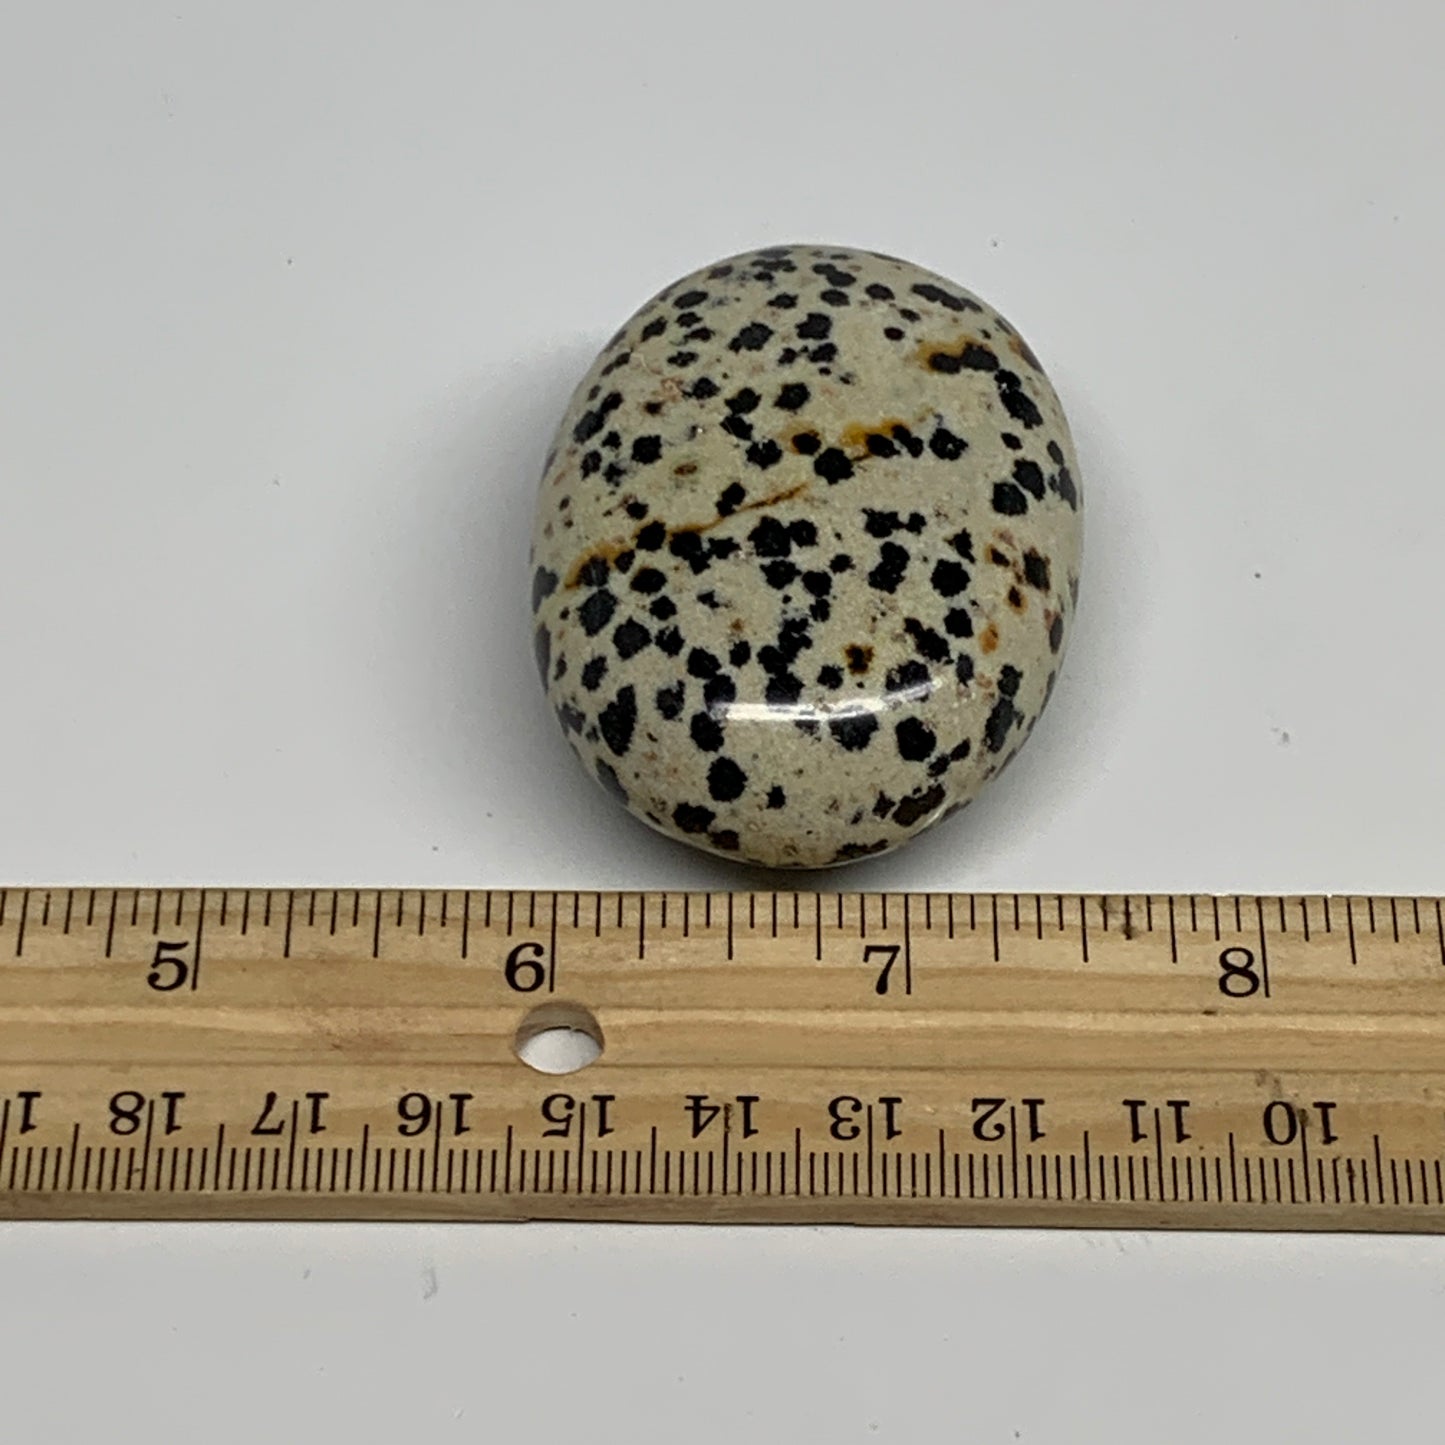 78.1g, 2.2"x1.6"x0.9", Natural Dalmatian Jasper Palm-Stone @India, B29465